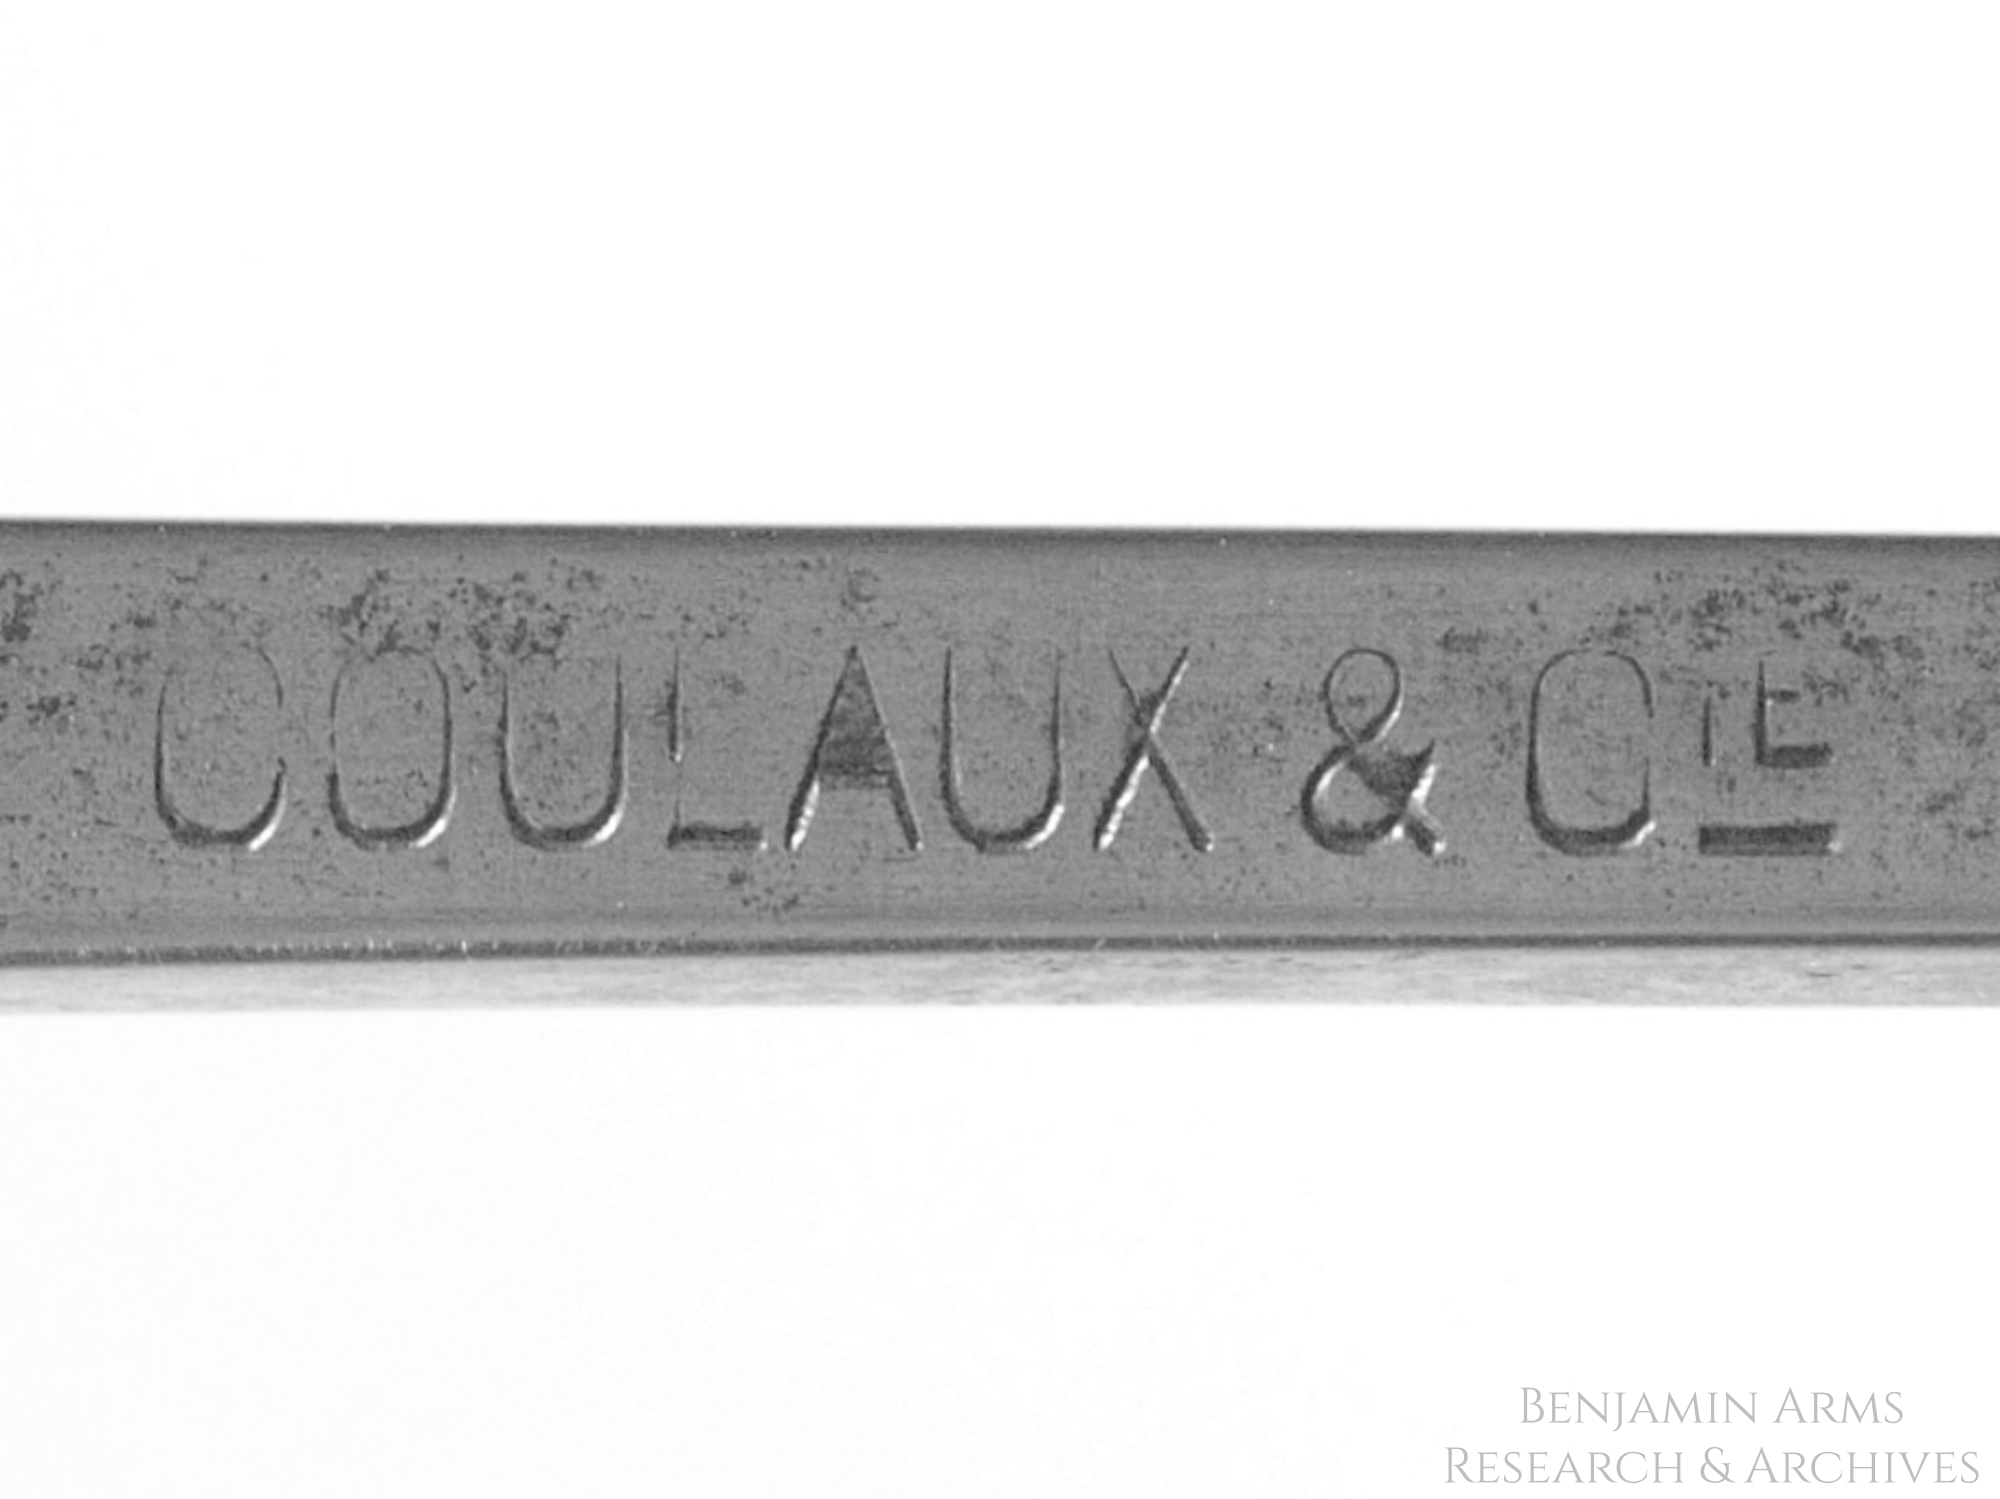 Coulaux & Cie - Swordmakers of Klingenthal 1801 - 1962